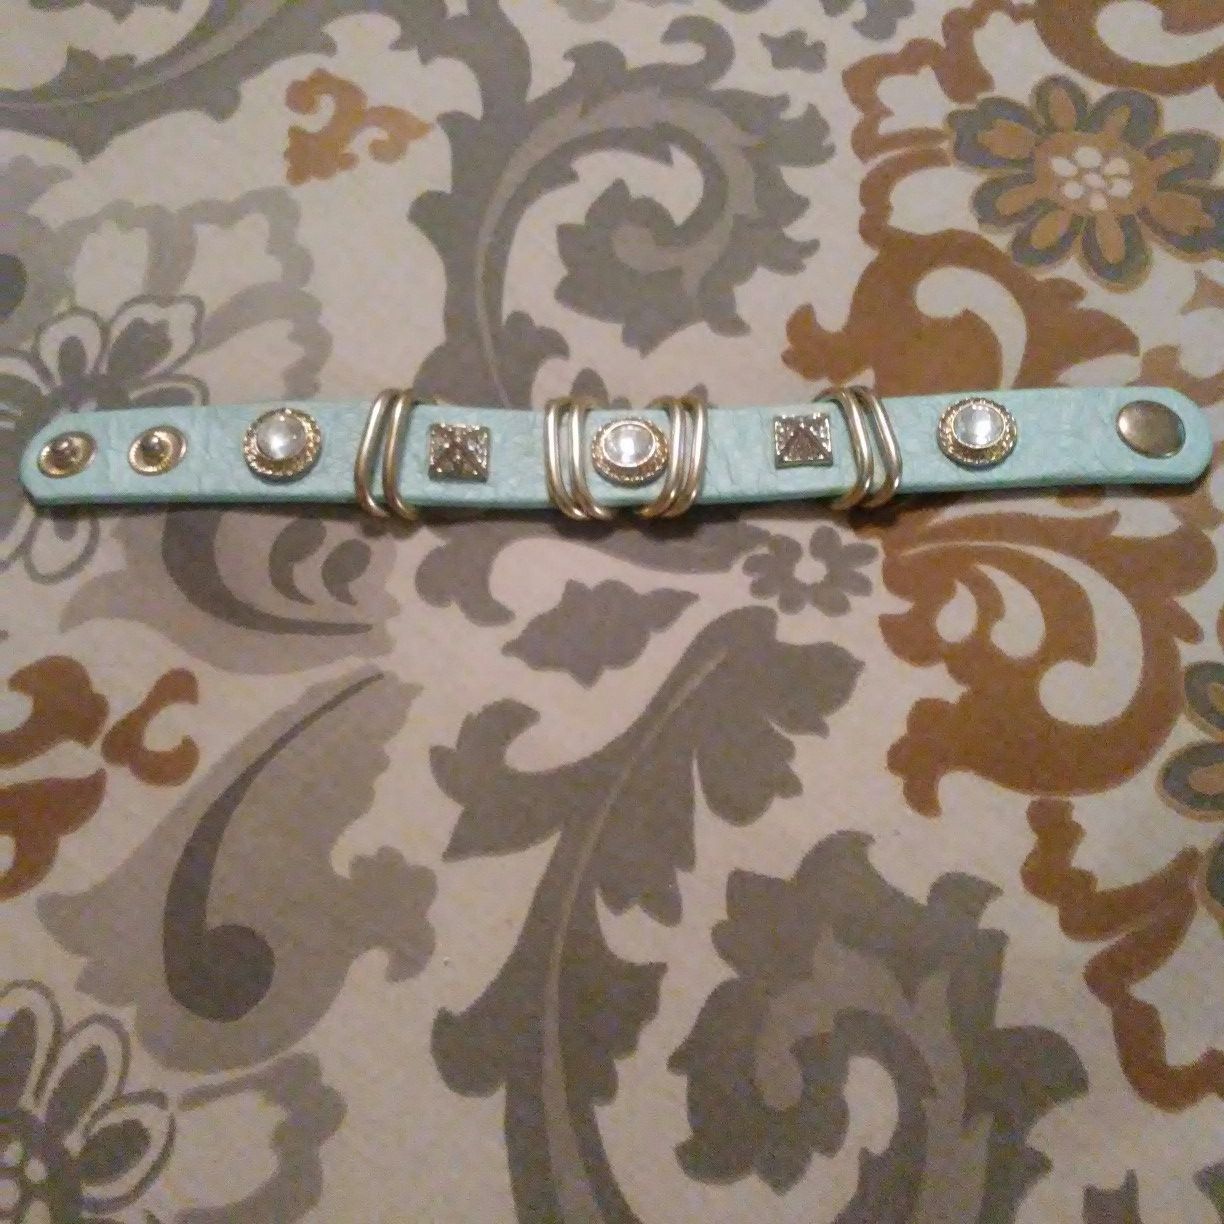 Leather jeweled bracelet